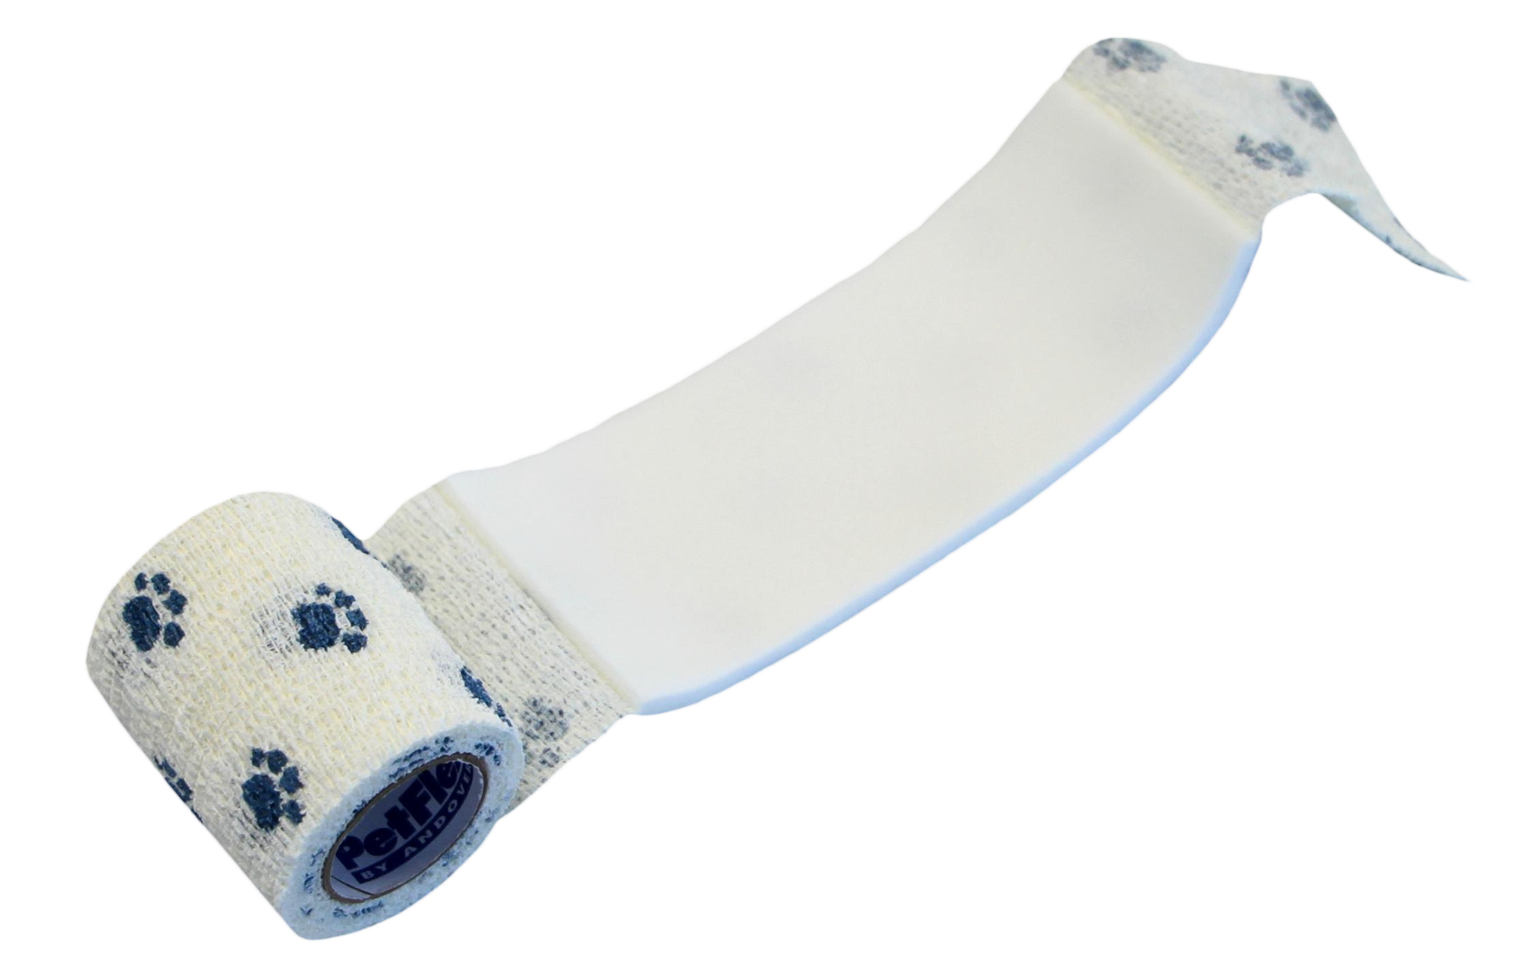 Afbeelding Bandage Petflex White Afd door K-9 Security dogs